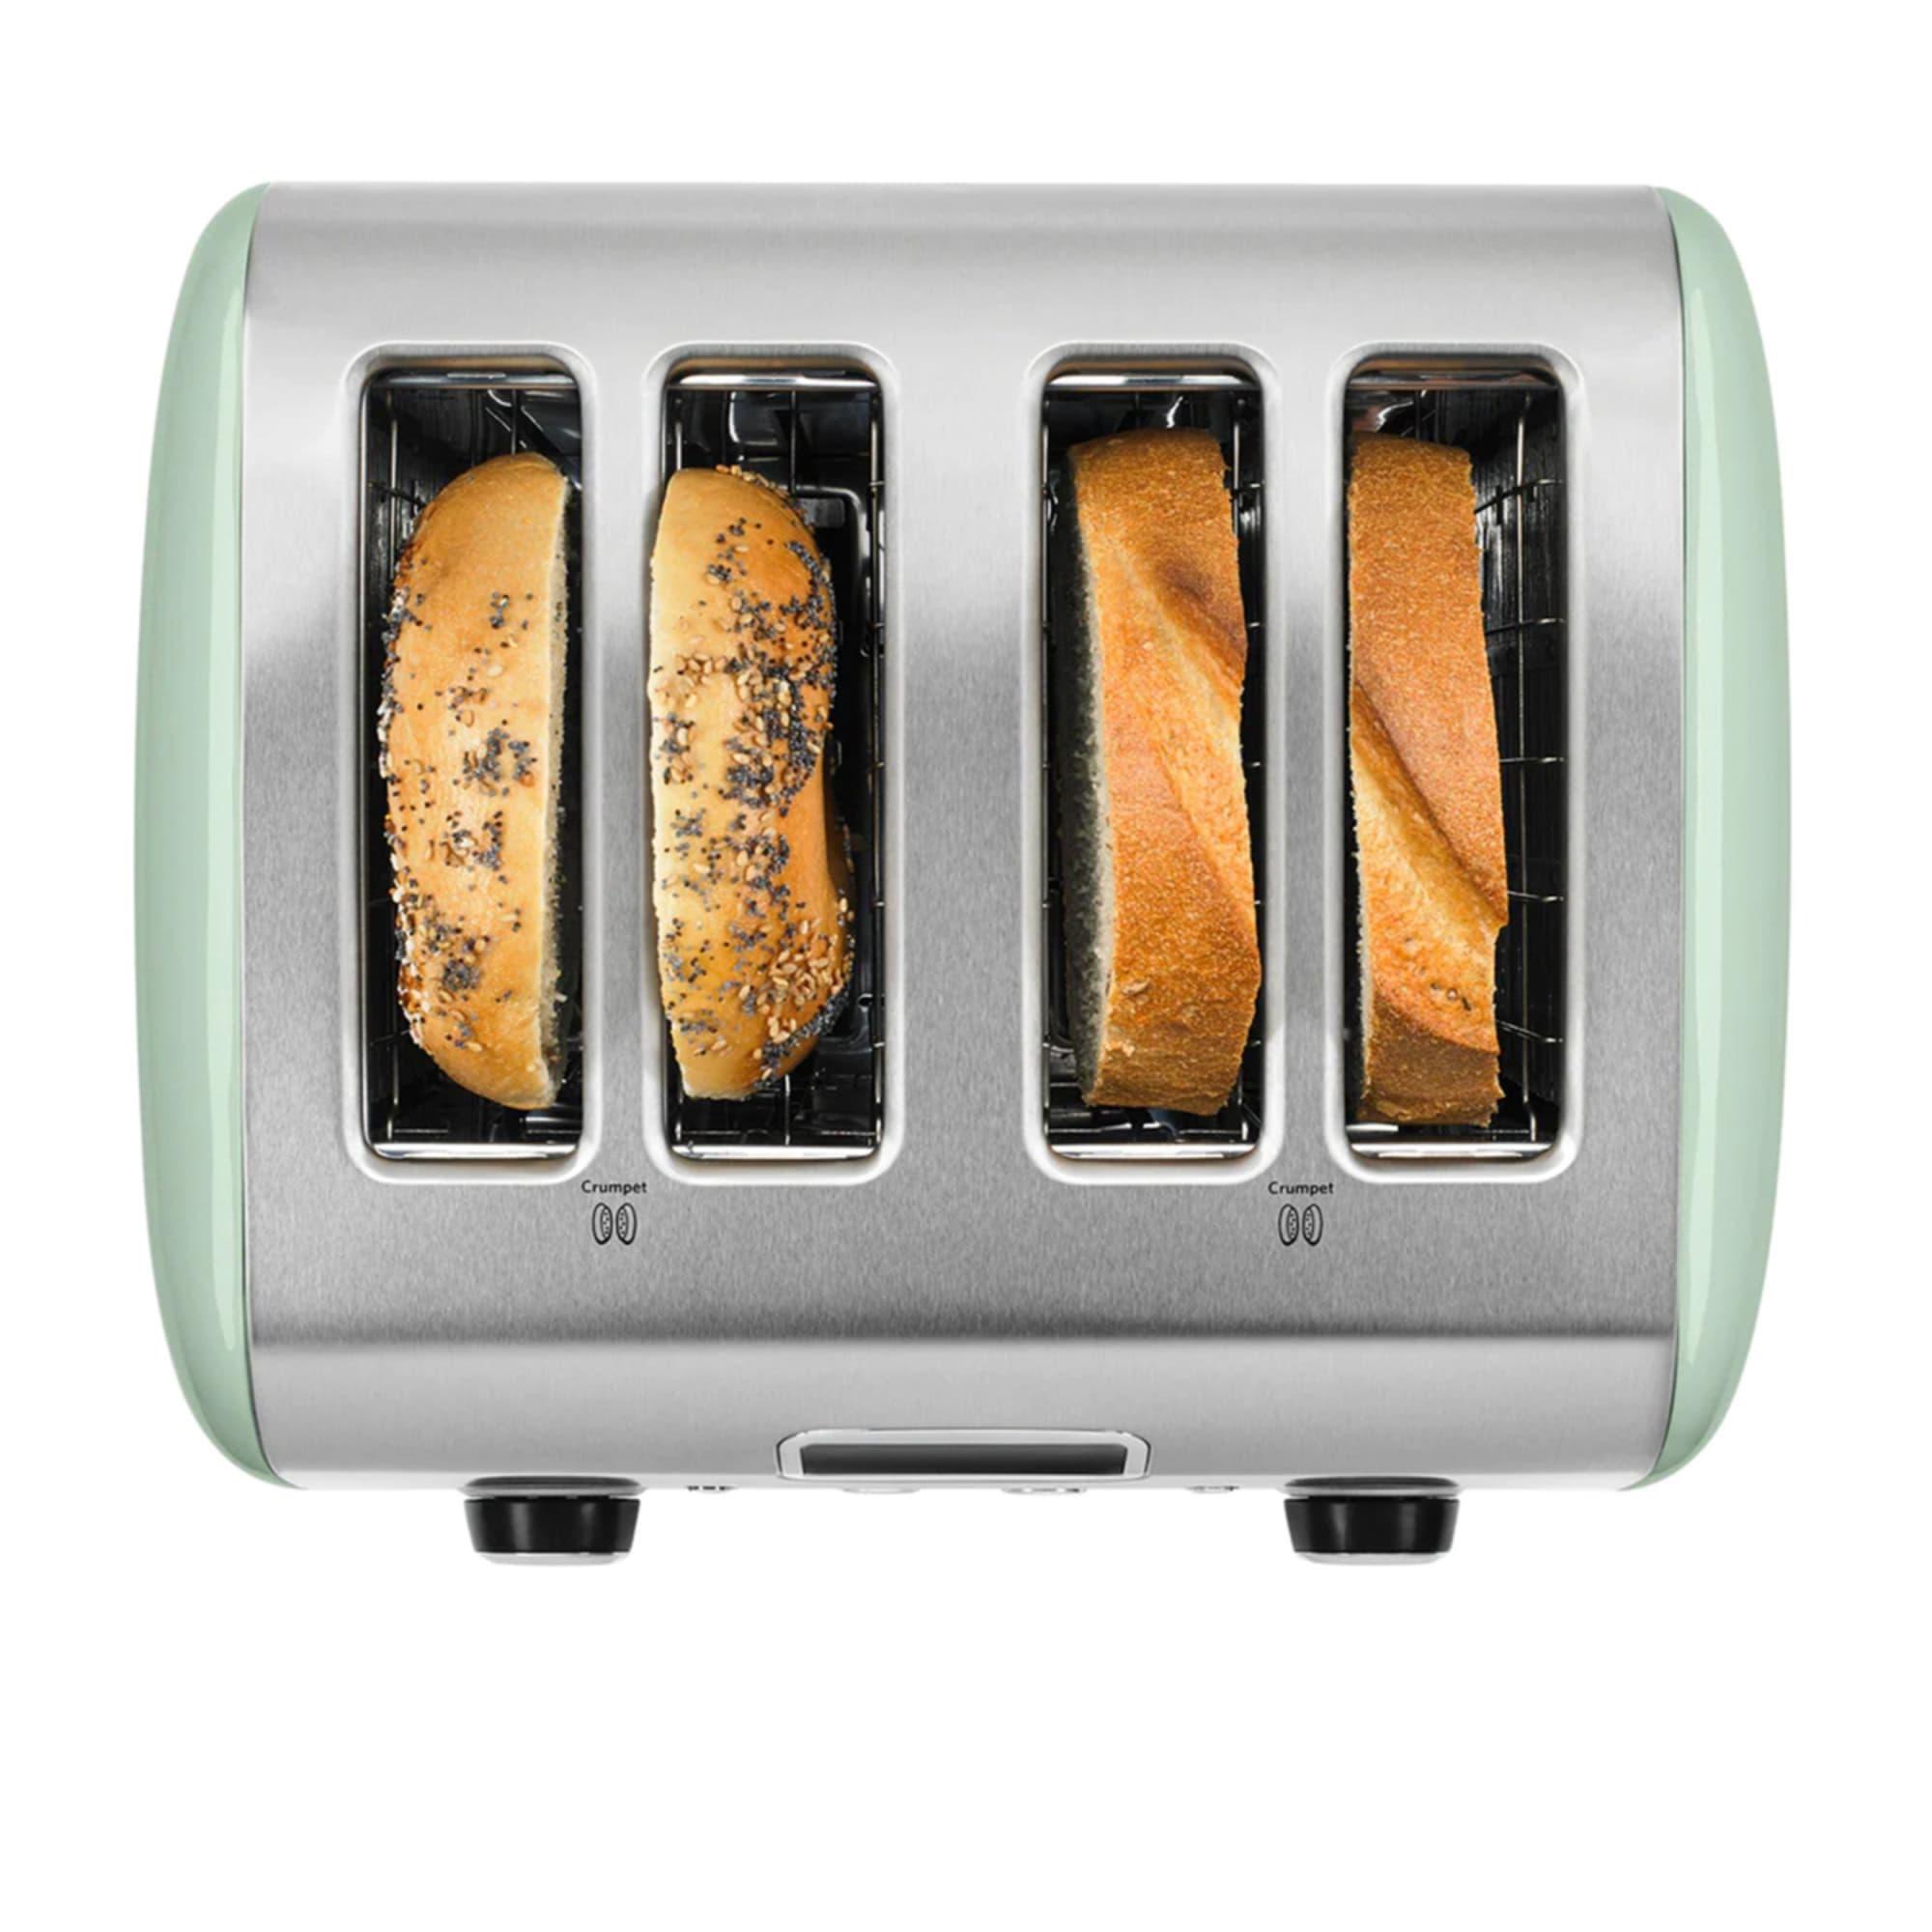 KitchenAid Artisan KMT423 4 Slice Toaster Pistachio Image 3